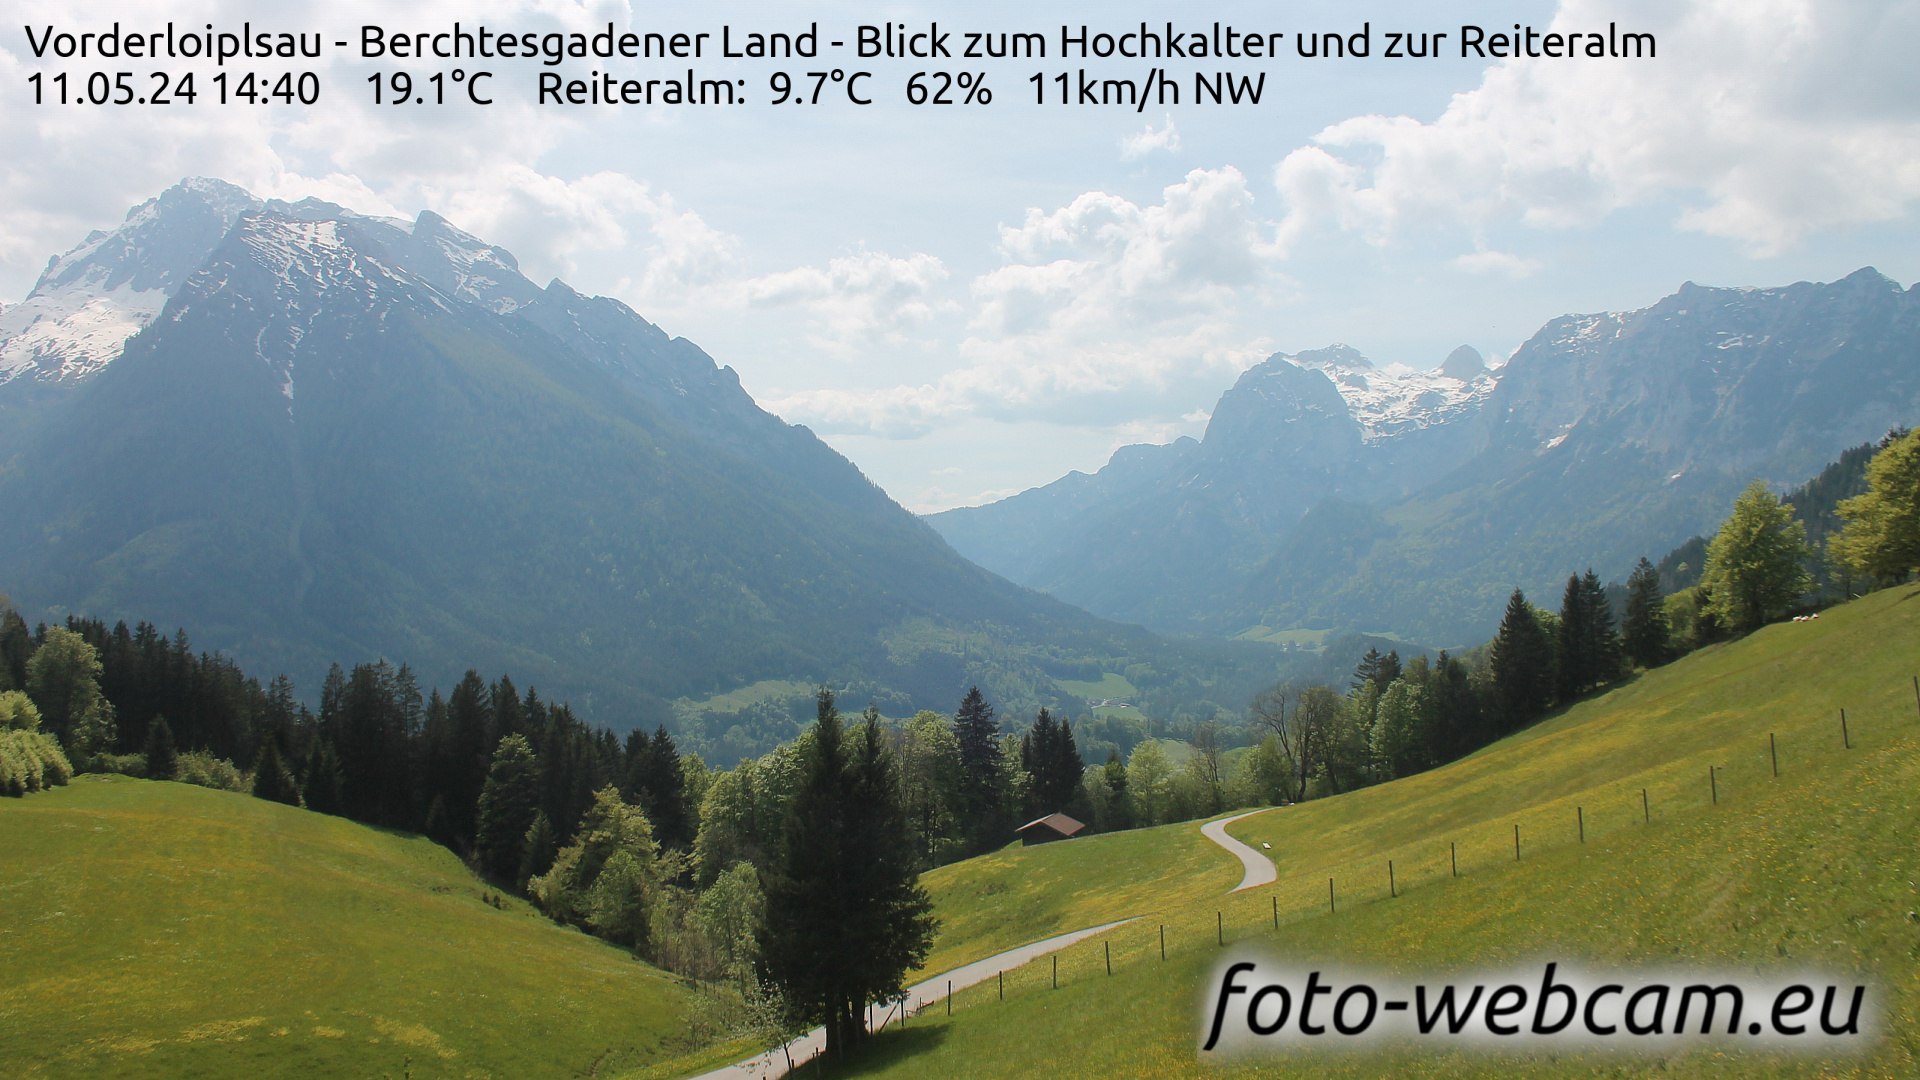 Ramsau bei Berchtesgaden Mi. 14:48